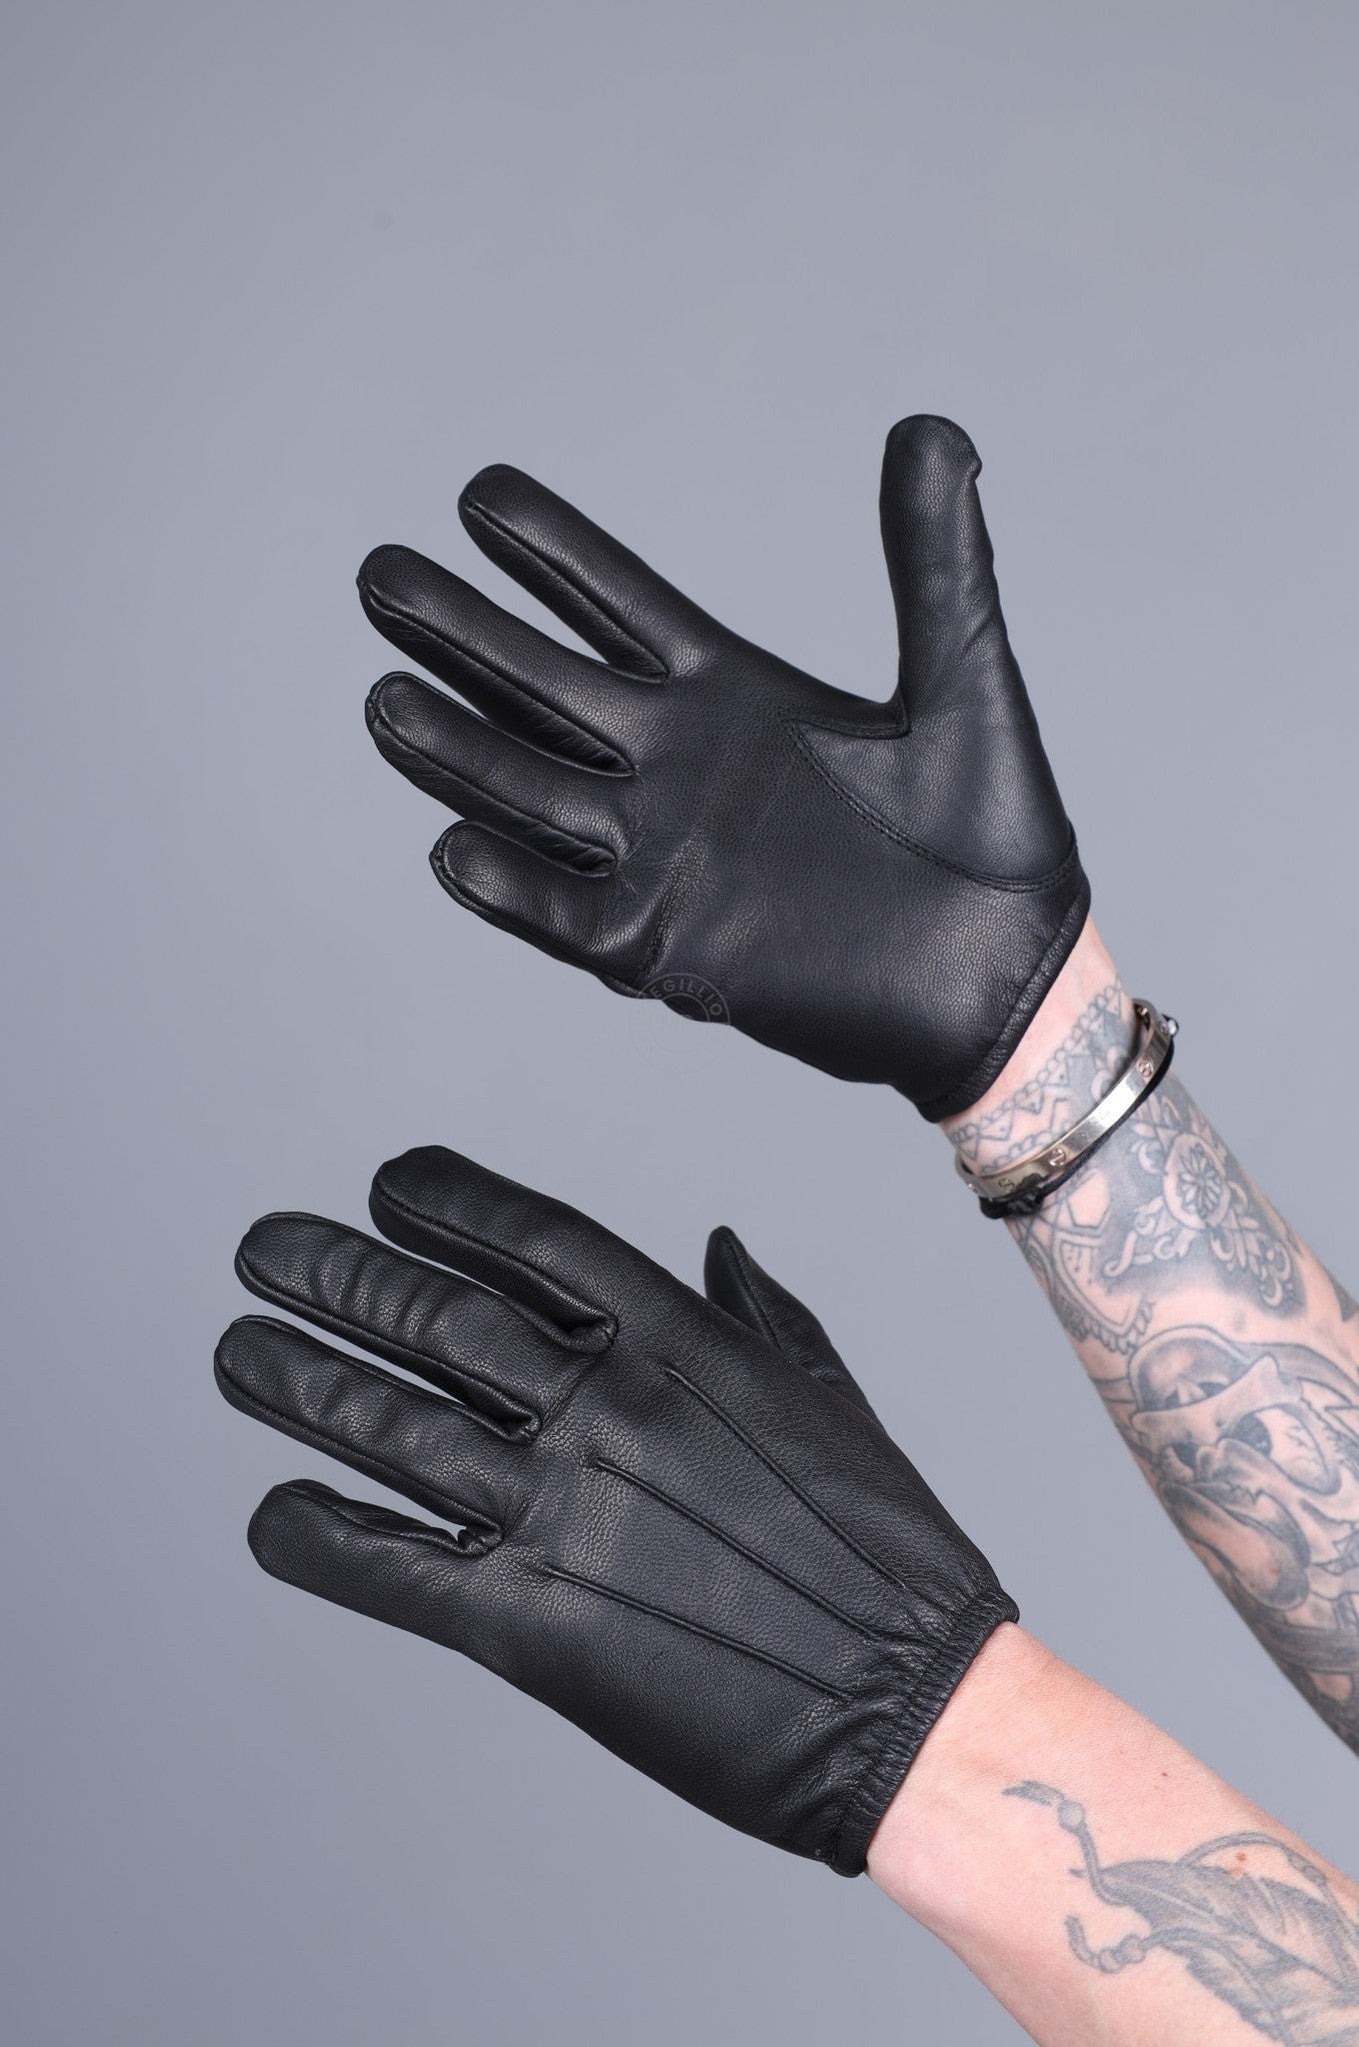 Black Leather Police Gloves at MR. Riegillio